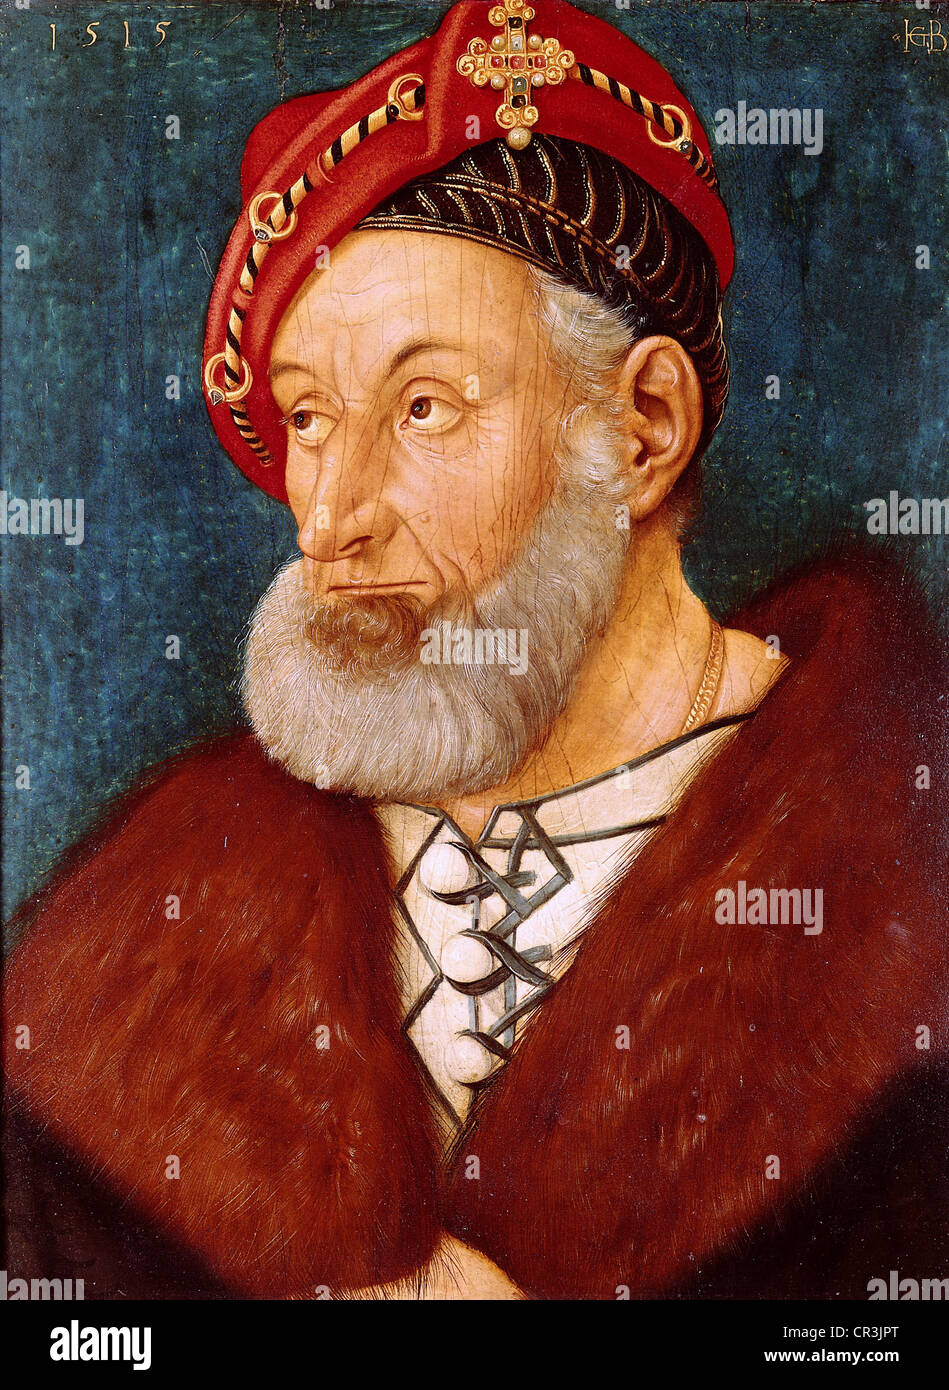 Christopher I, 13.11.1453 - 19.3.1527, Margrave of Baden-Baden 1475 - 1515, portrait, painting by Hans Baldung Grien, 1515, Alte Pinakothek, Munich, Stock Photo